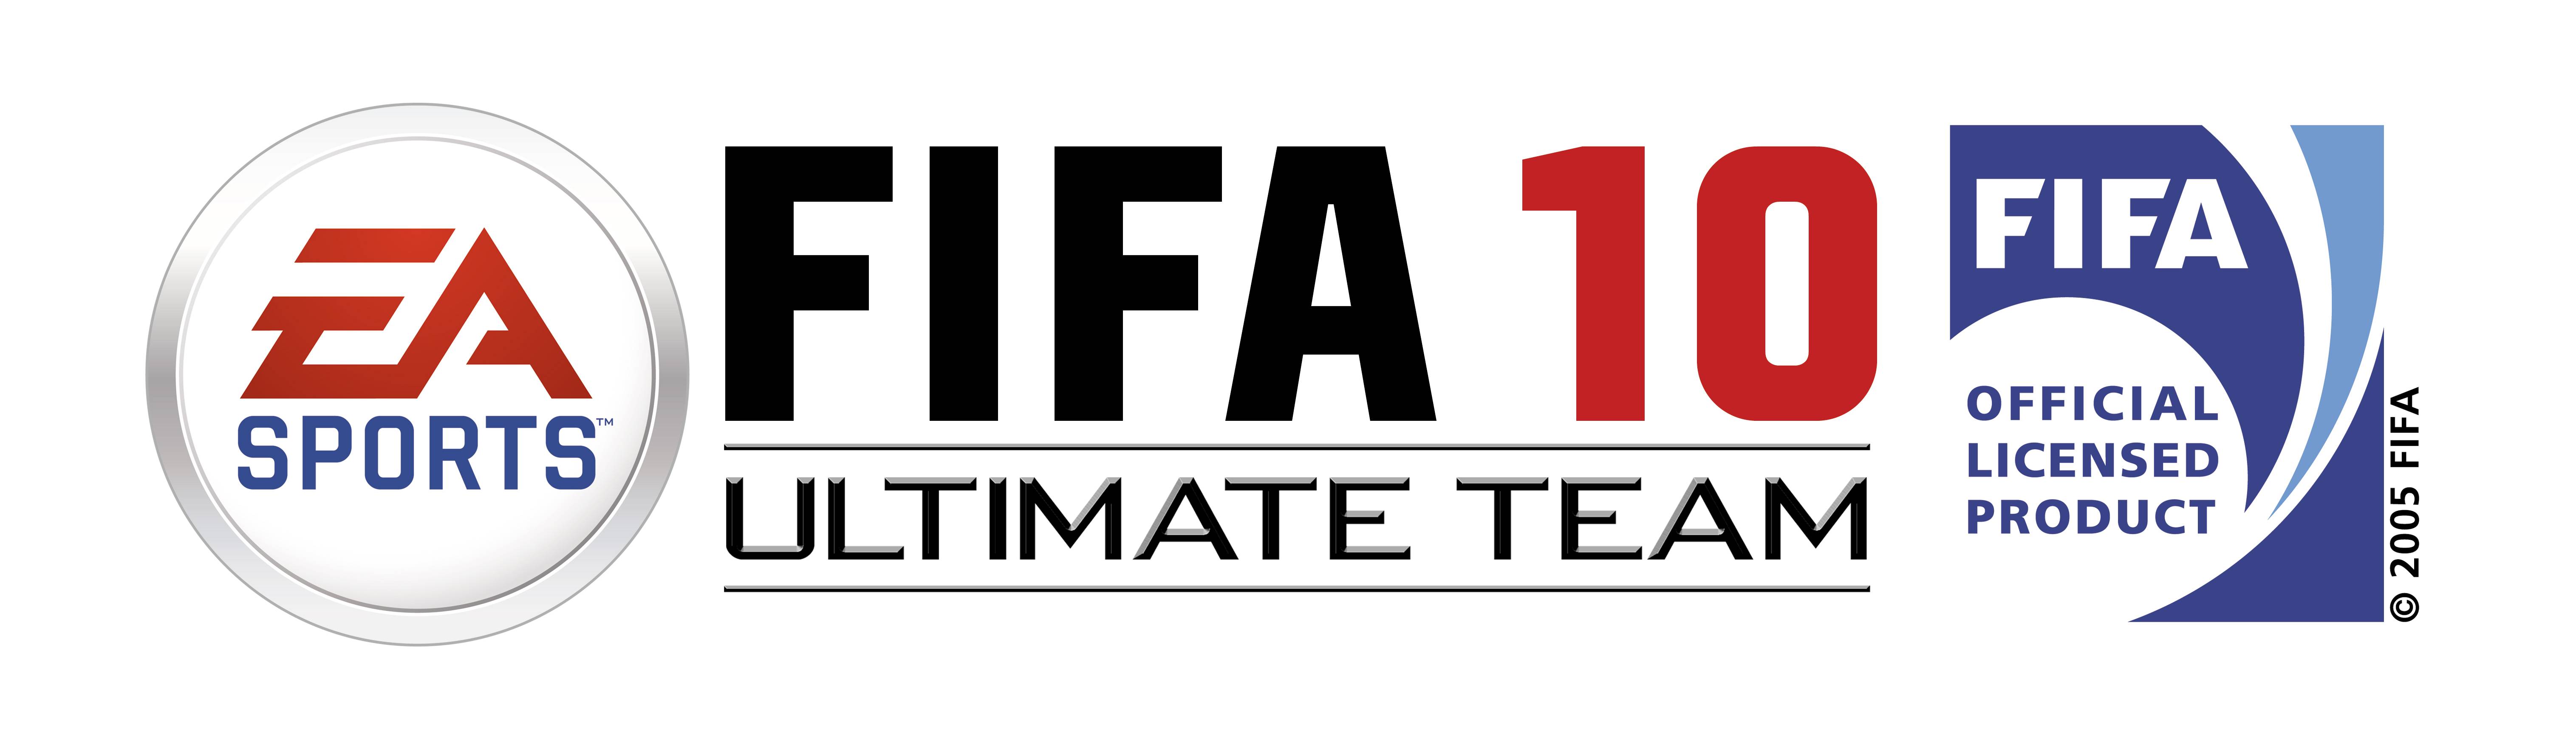 fifa_10_ultimate_team_v1_hori_hires